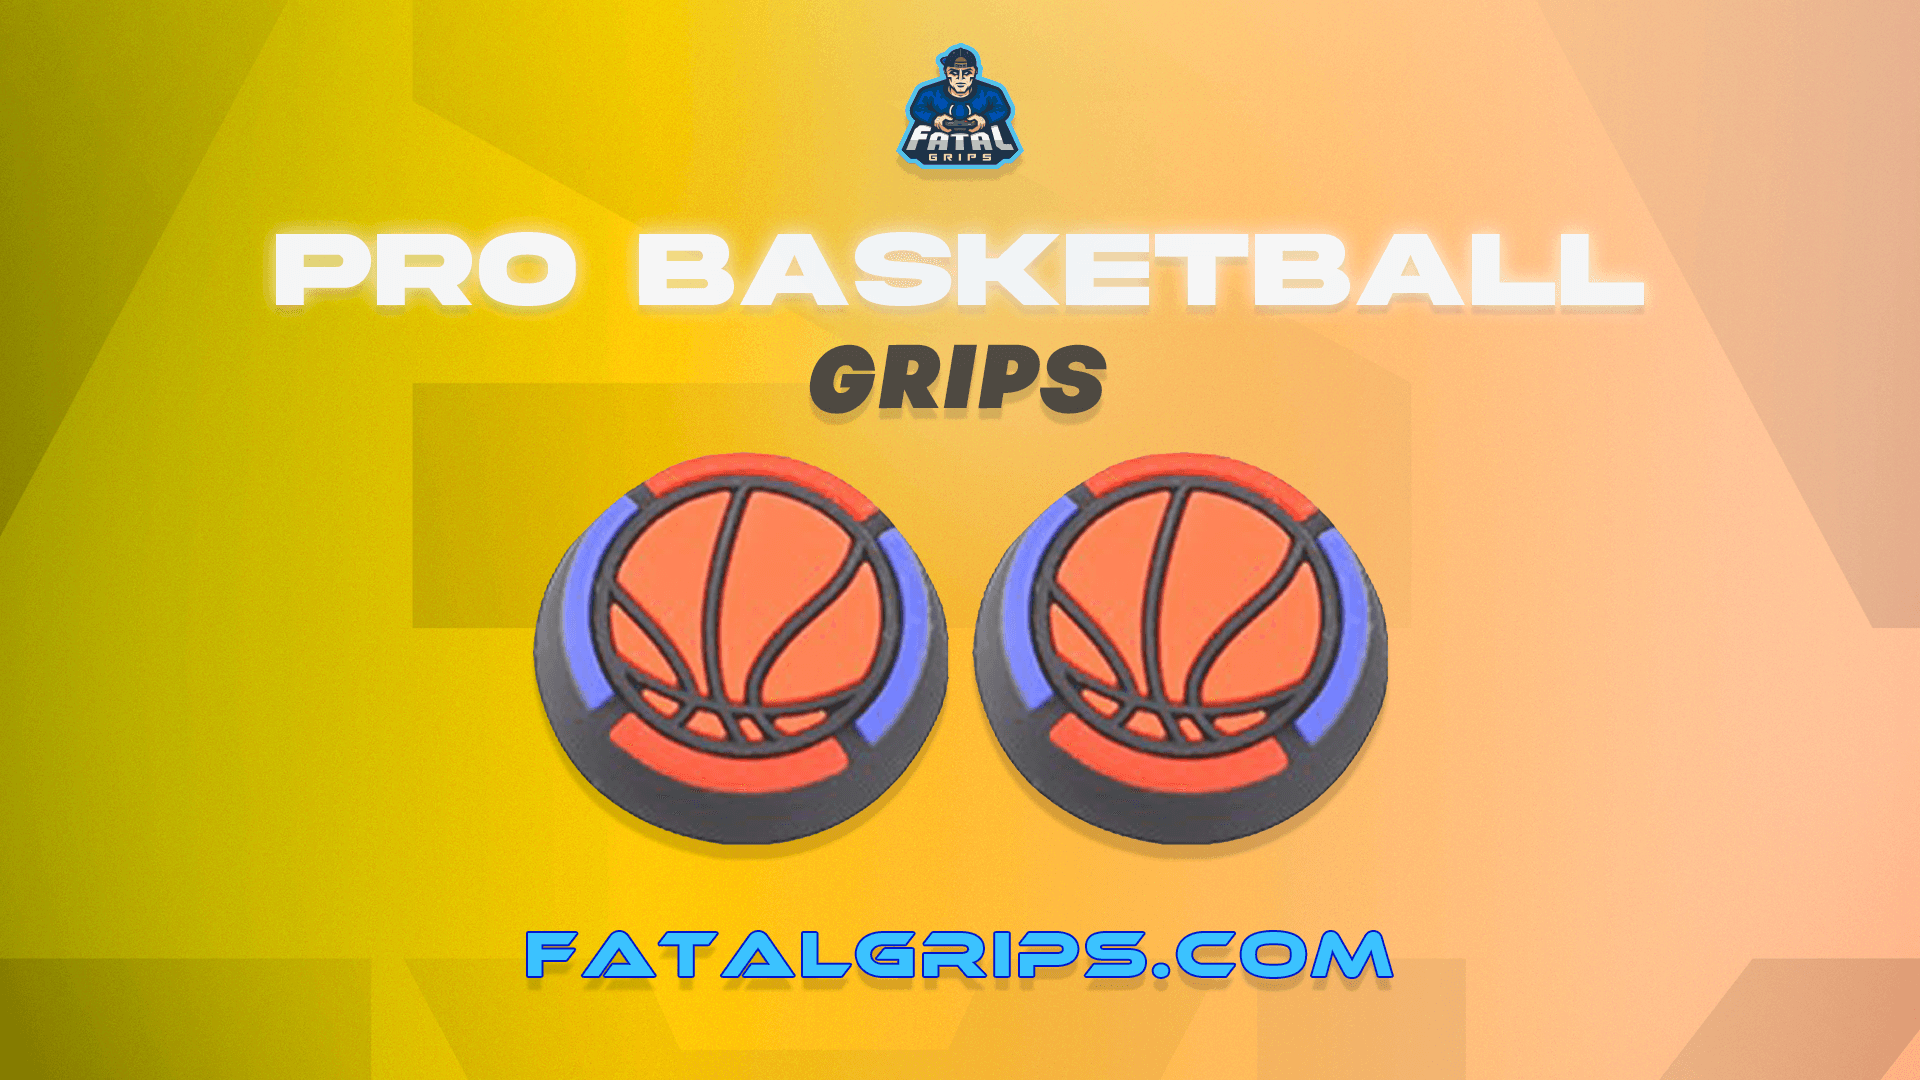 Pro Basketball Grips - Fatal Grips